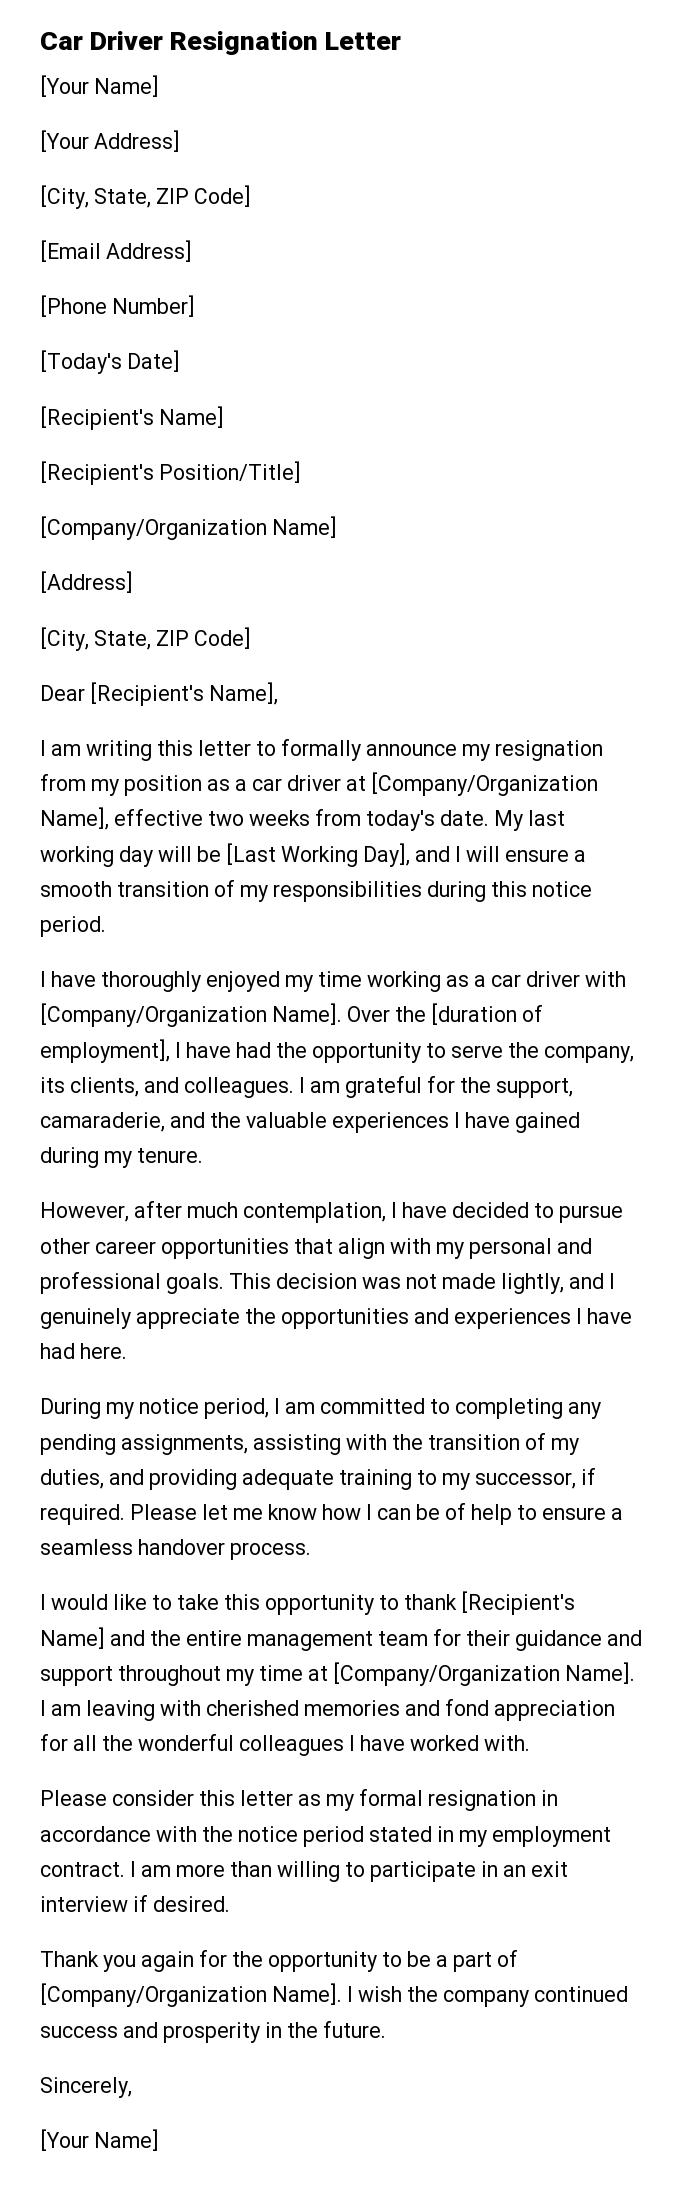 Car Driver Resignation Letter